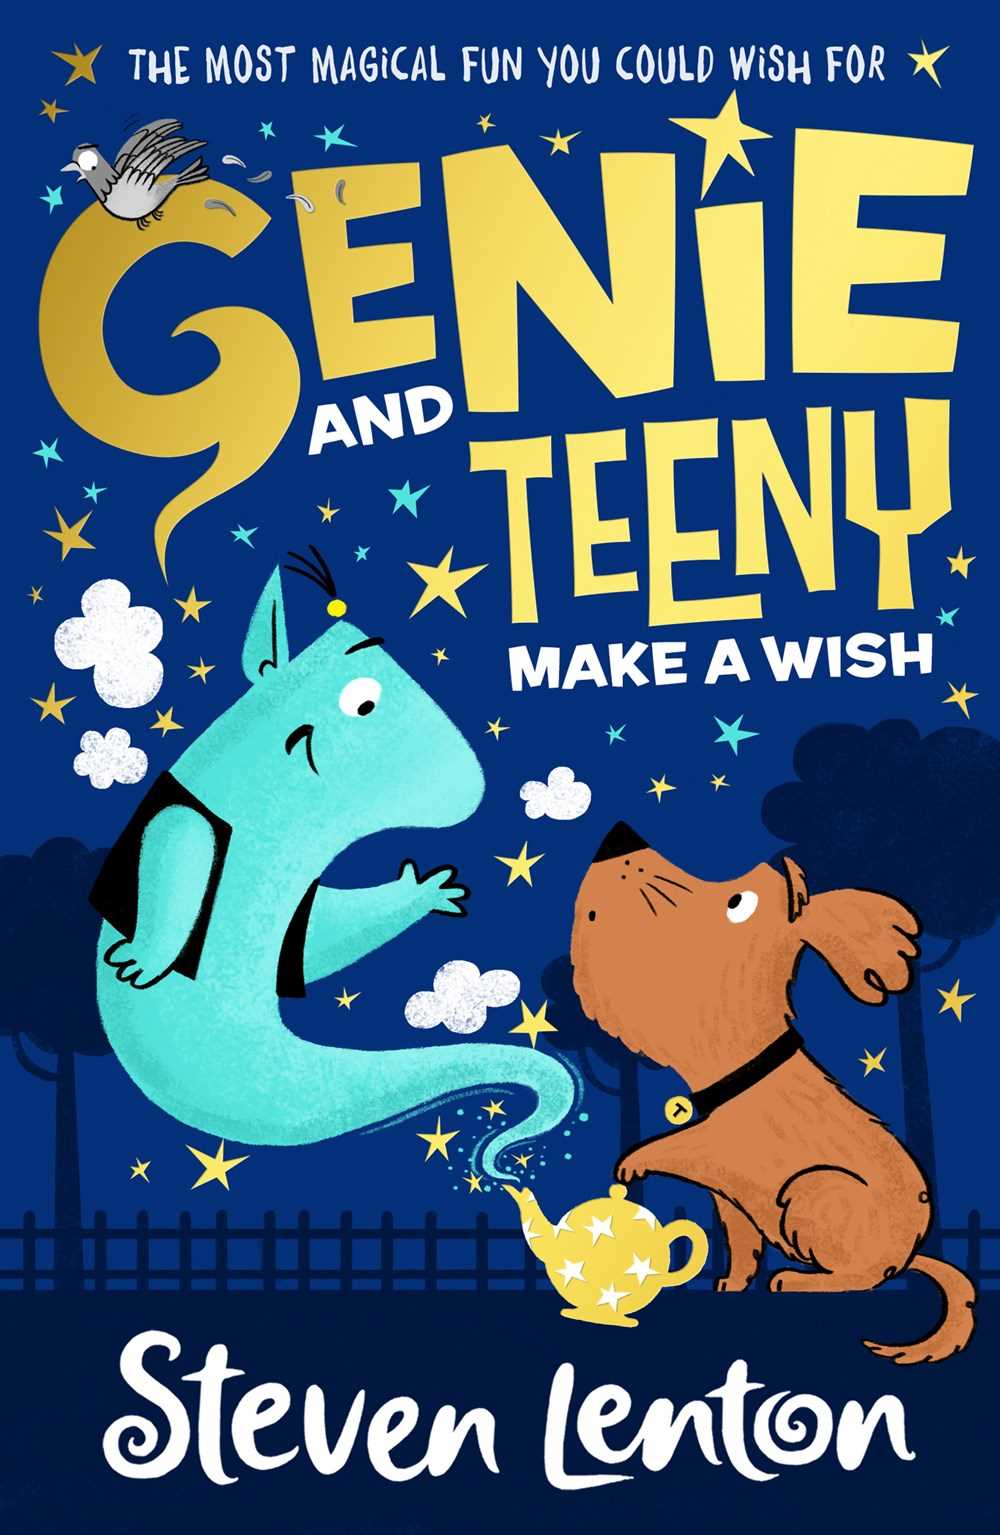 Genie and Teeny #01: Make a Wish